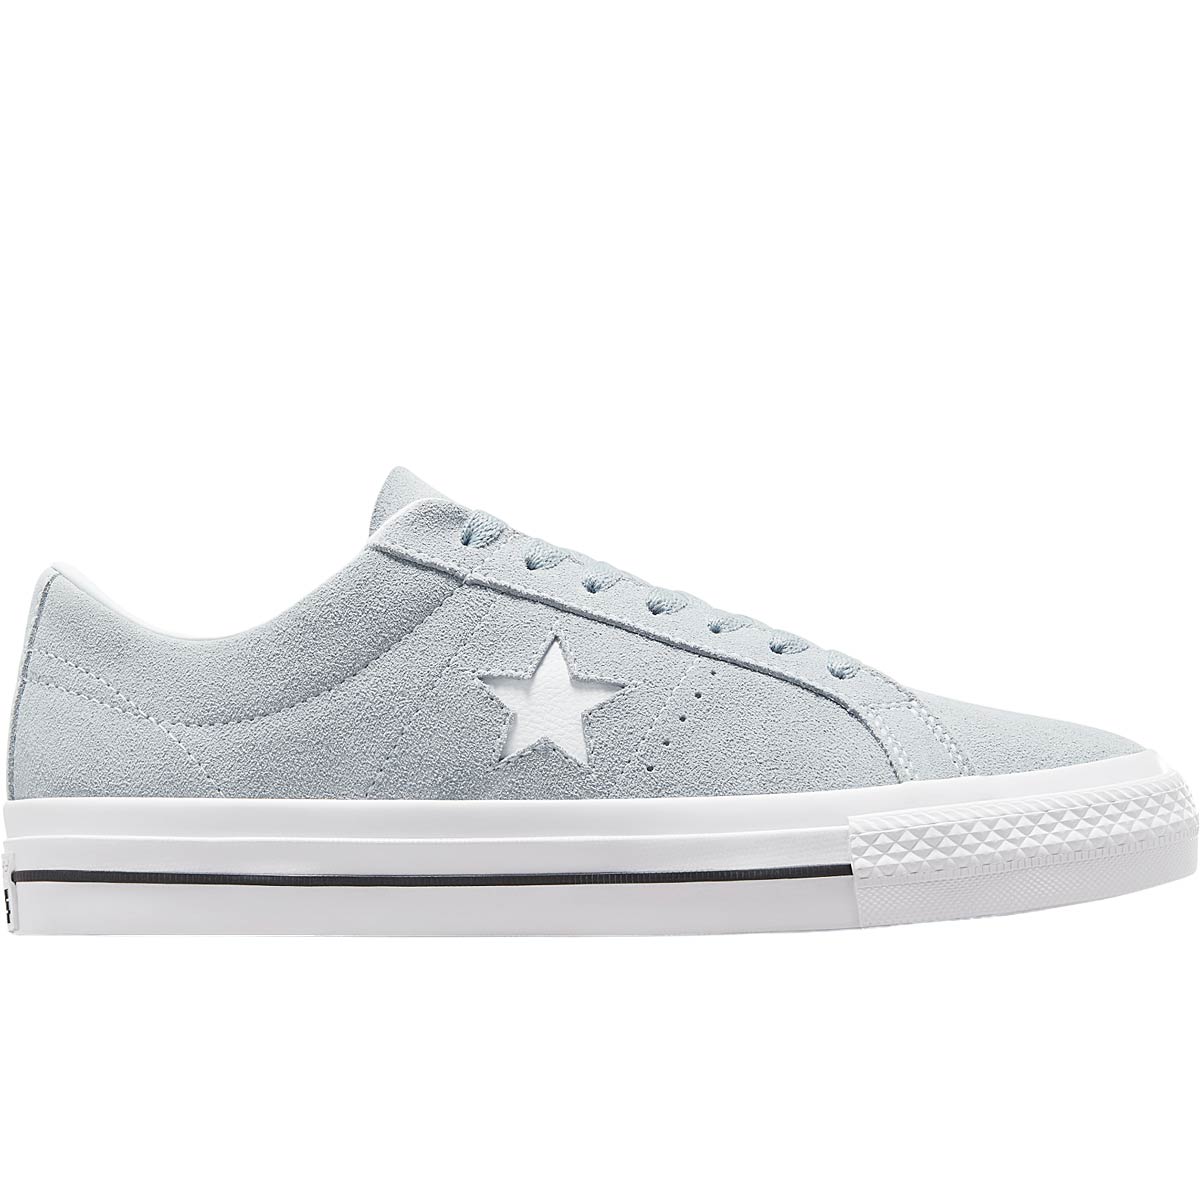 Converse One Star Pro, Grey/white/black EU43